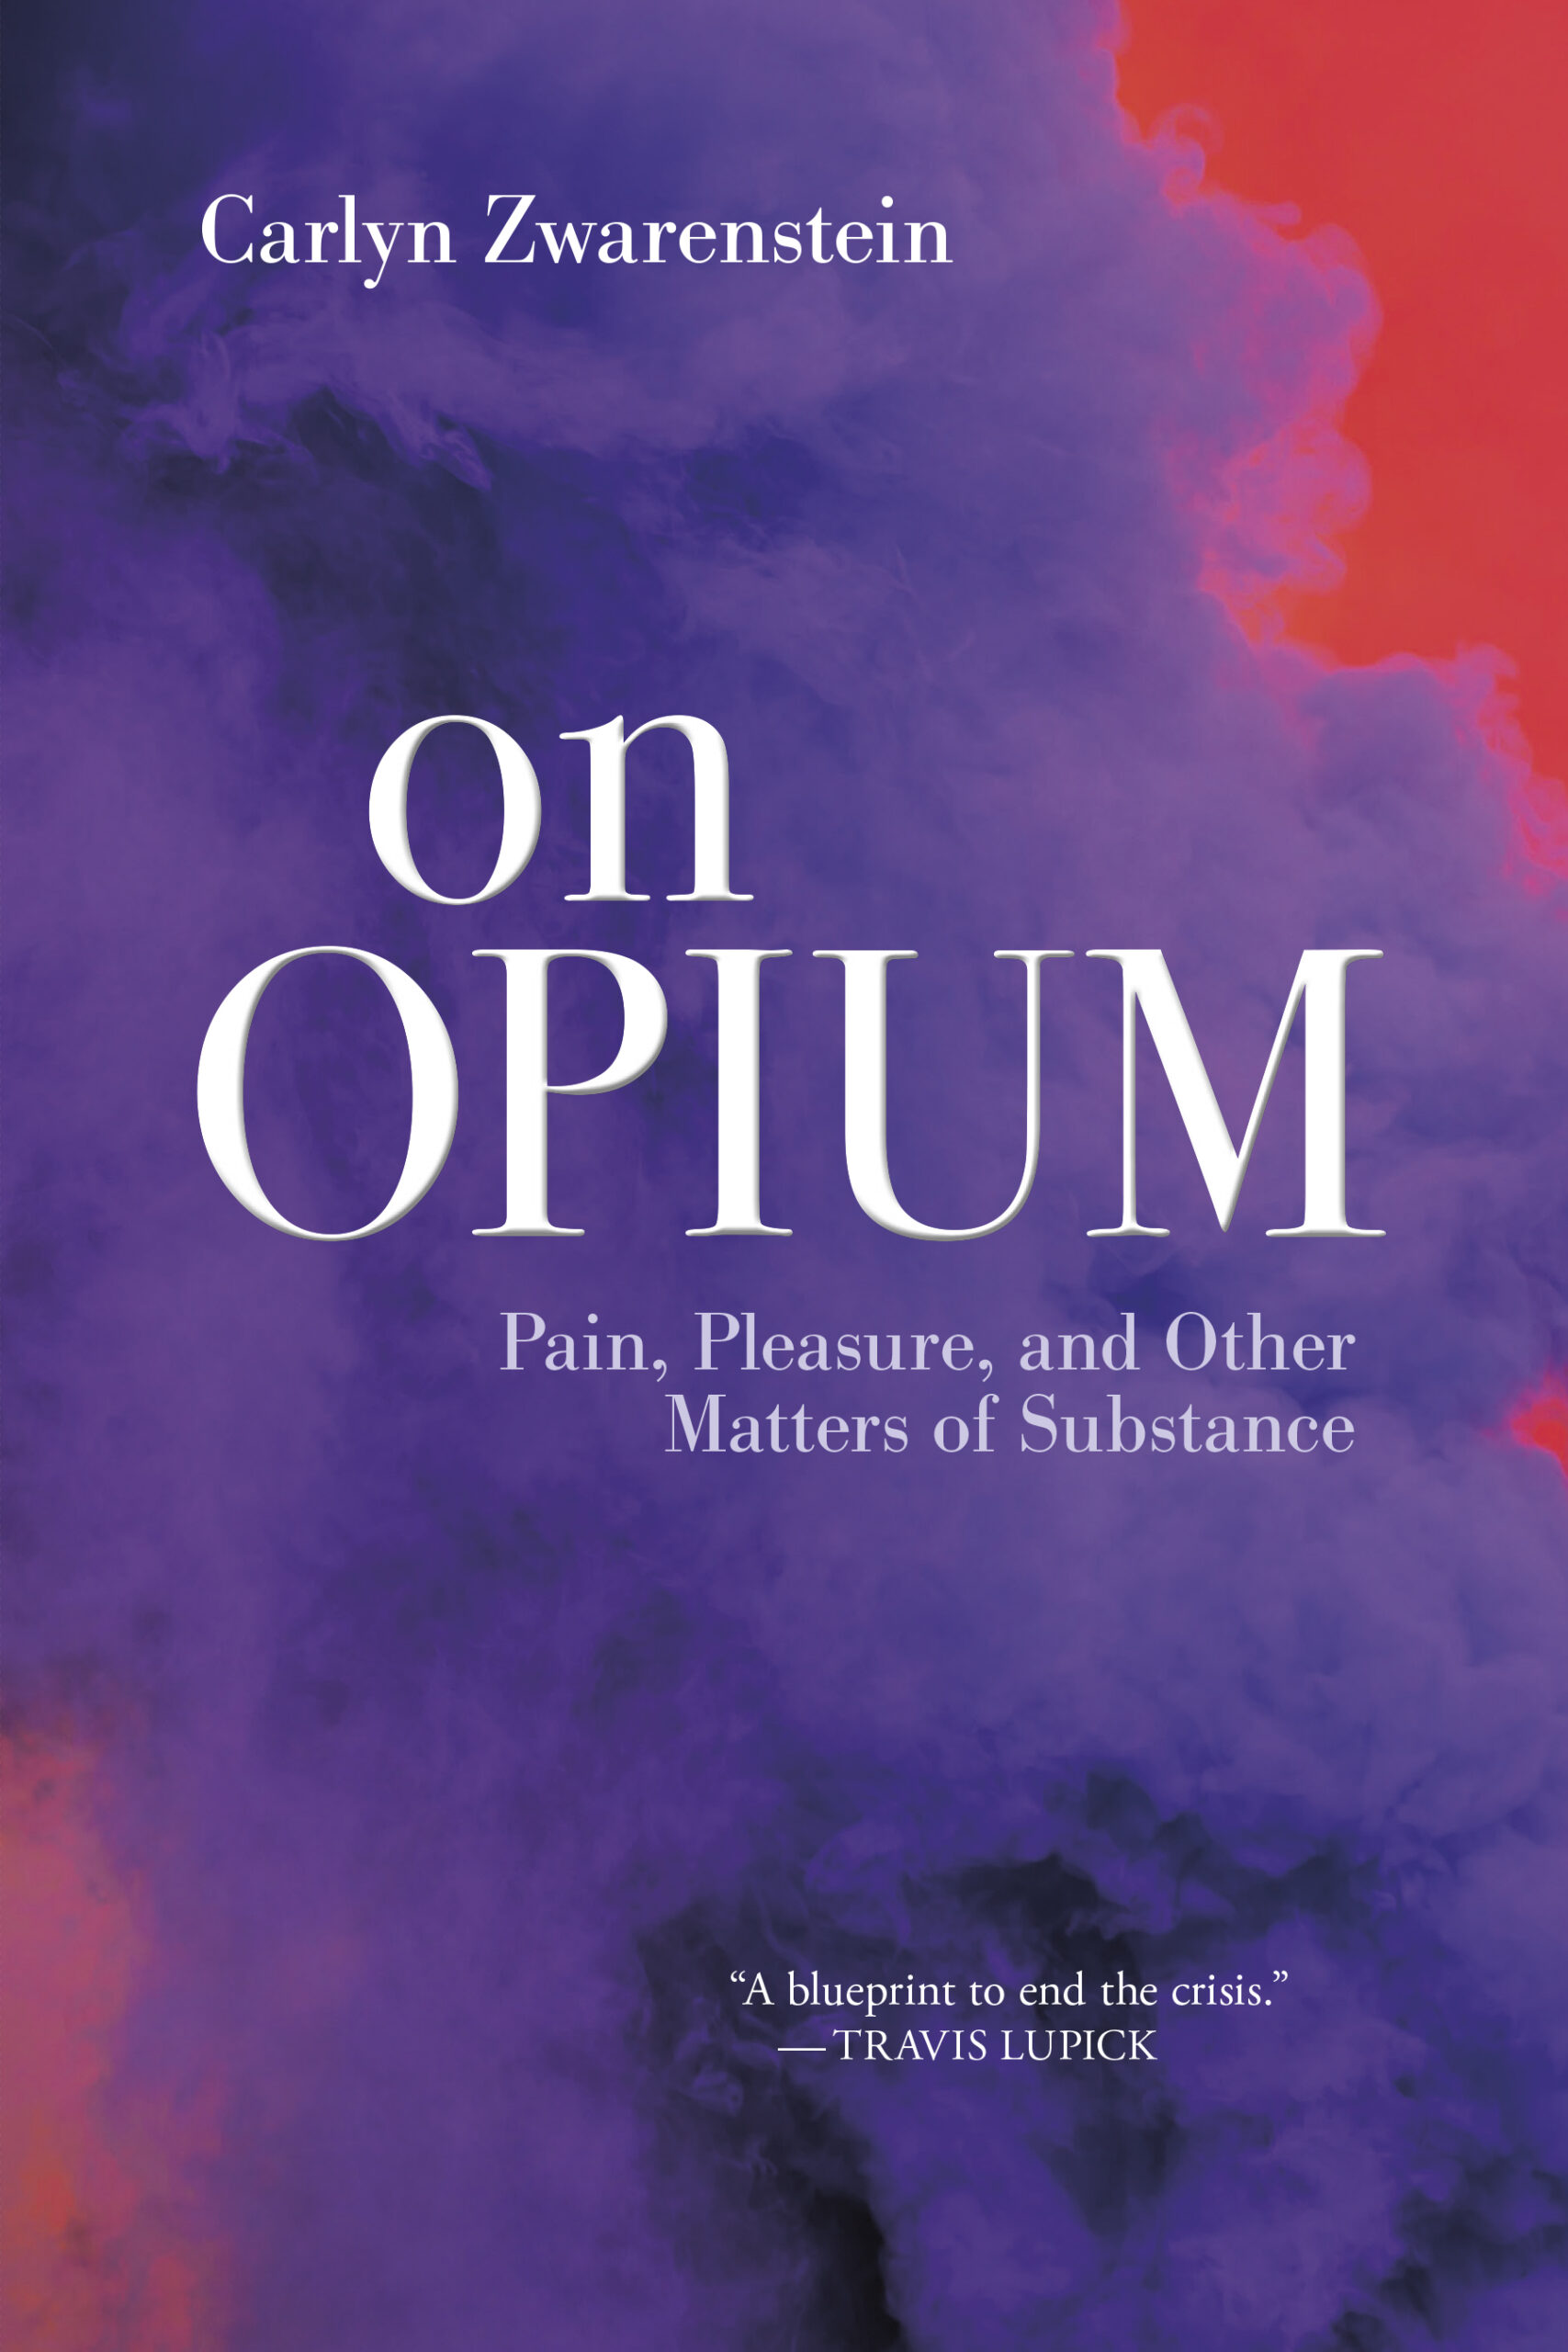 An Excerpt from On Opium by Carlyn Zwarenstein